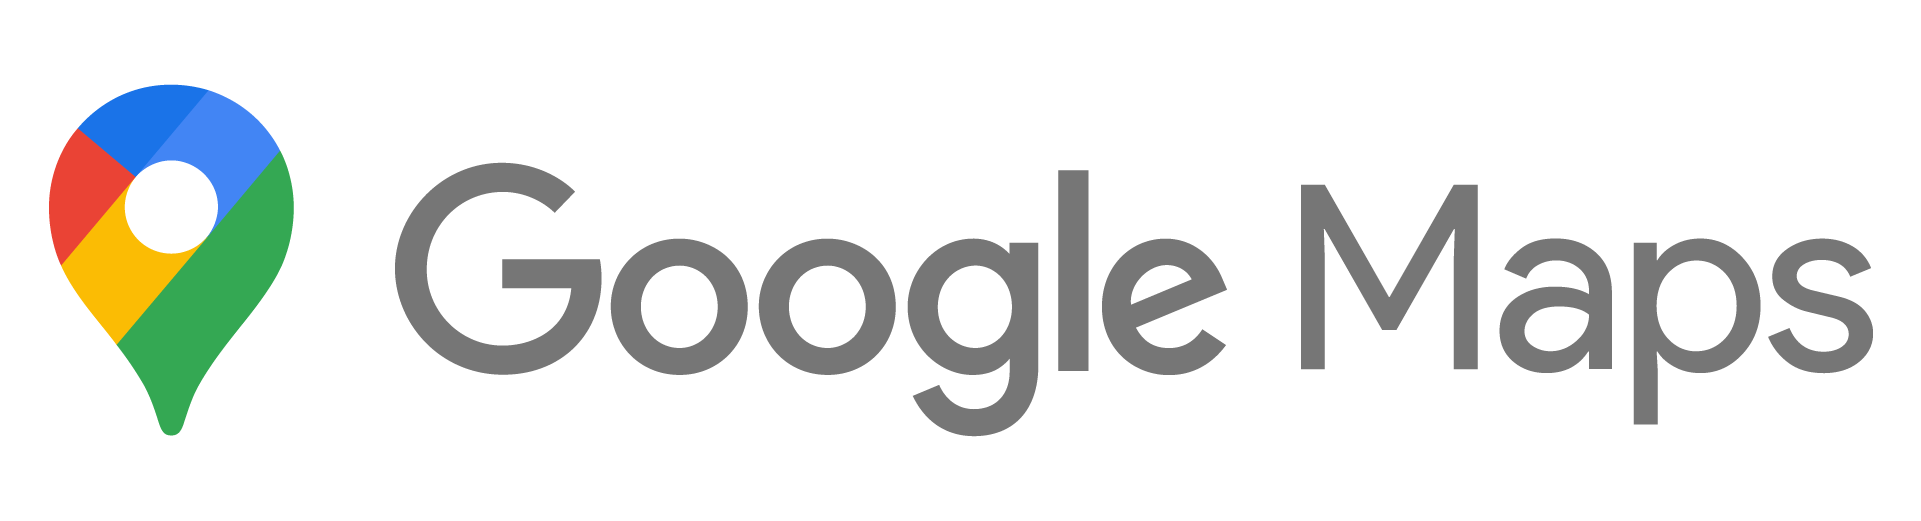 Google Maps Partner logos-04-05